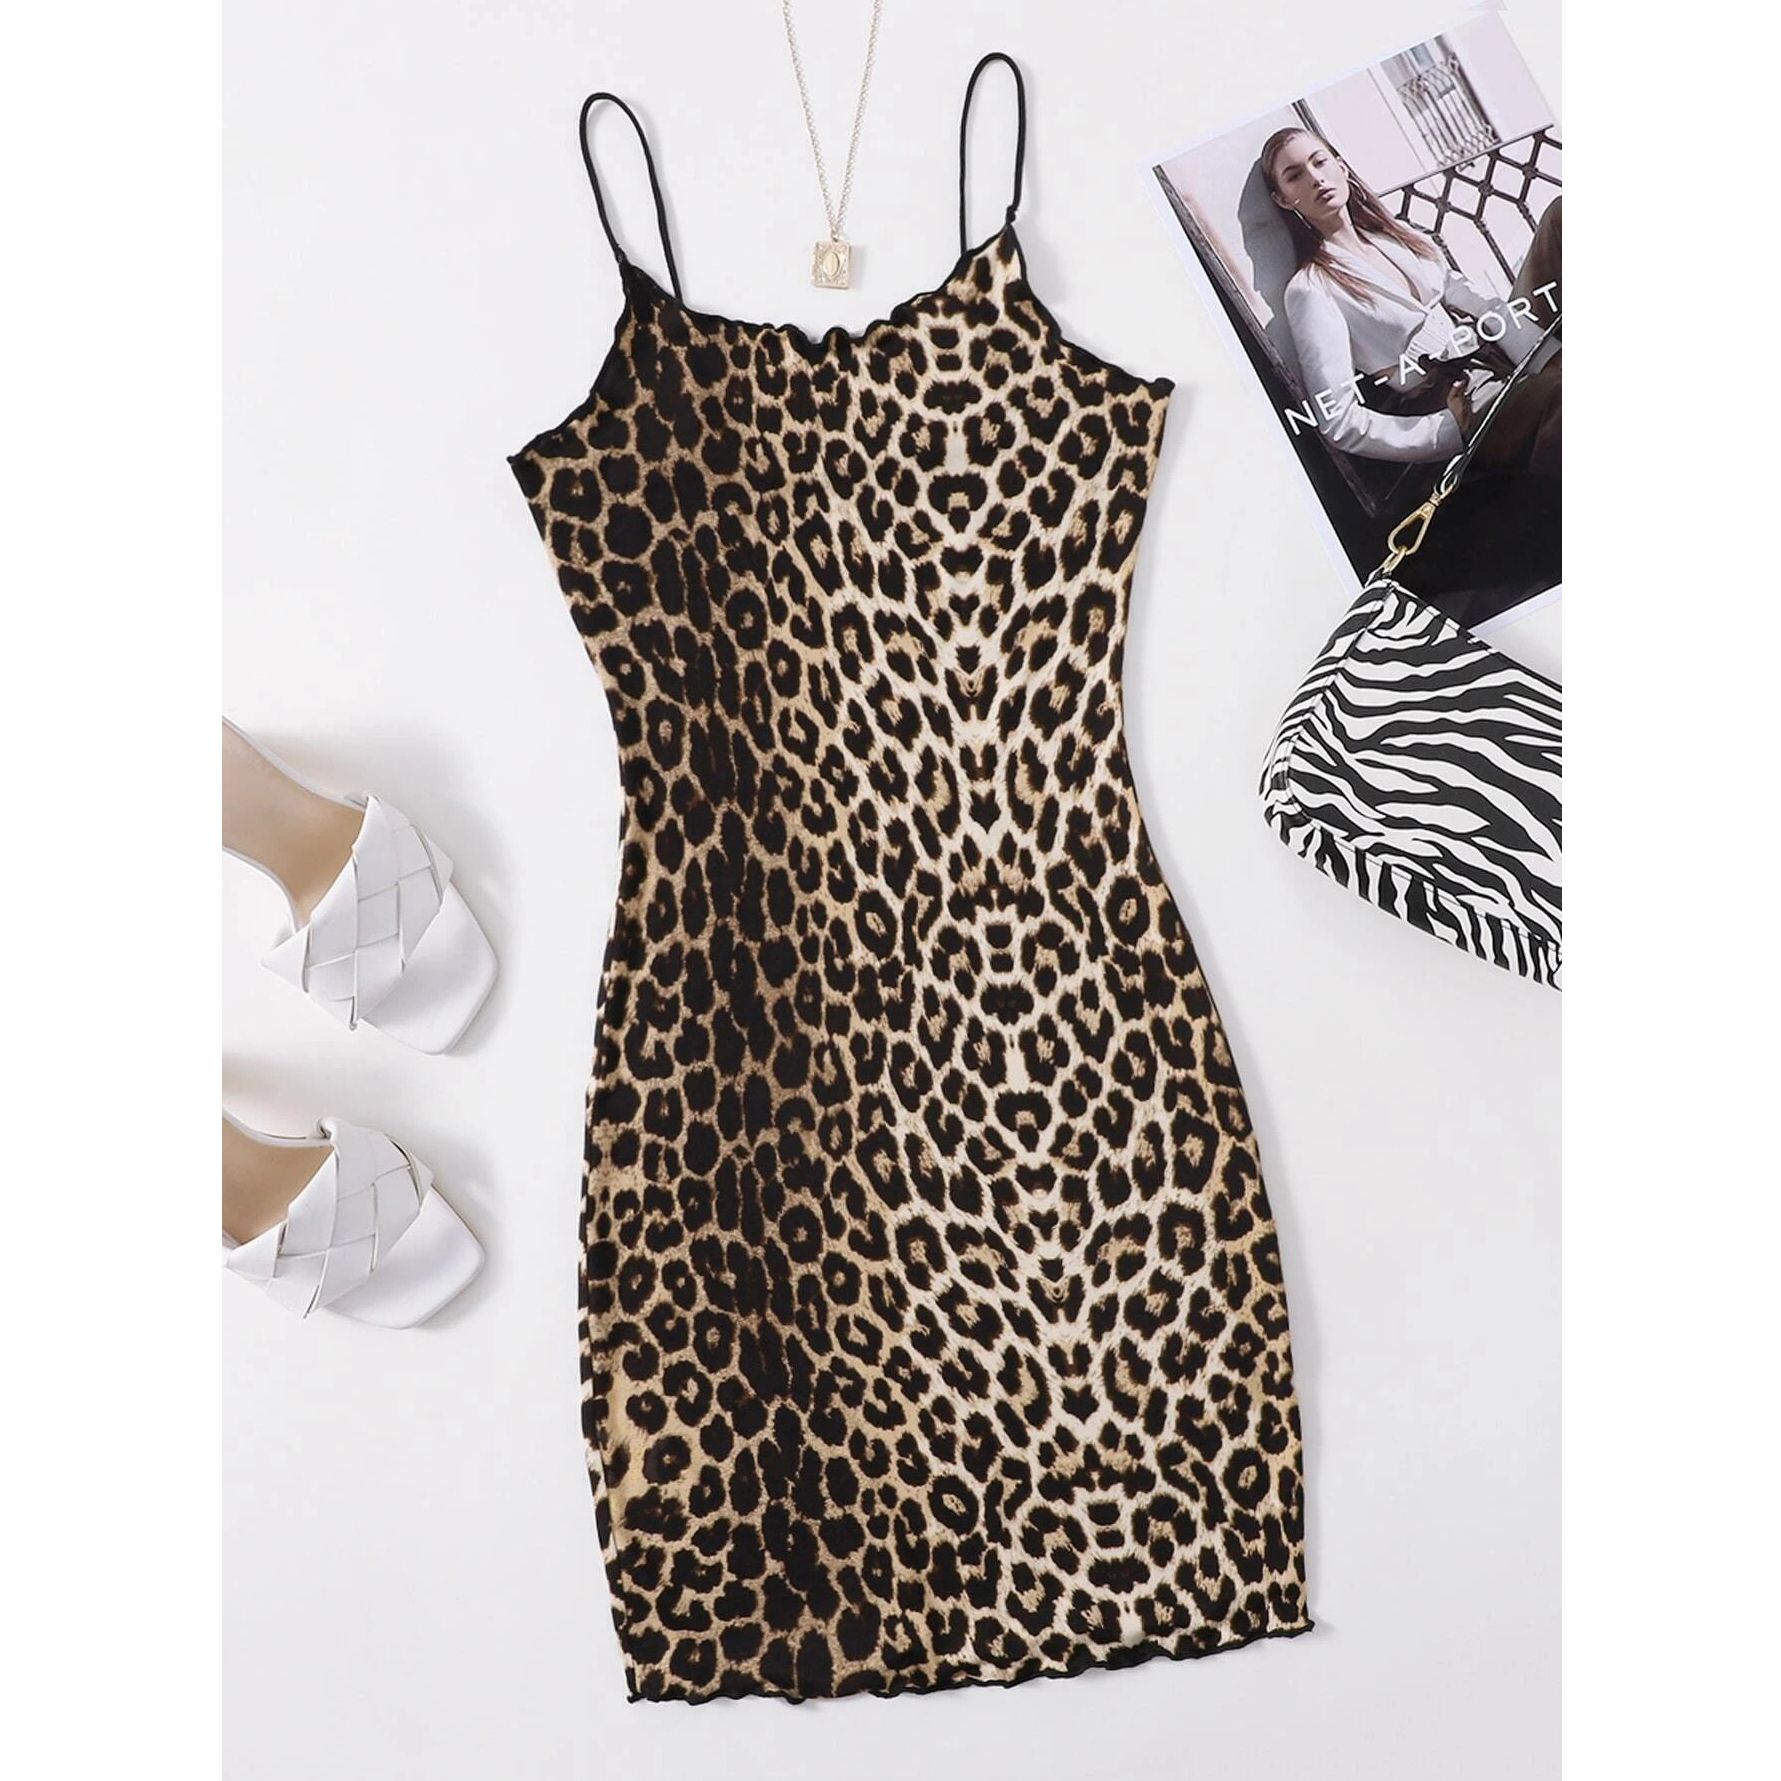 Lettuce Trim Leopard Dress - Xl